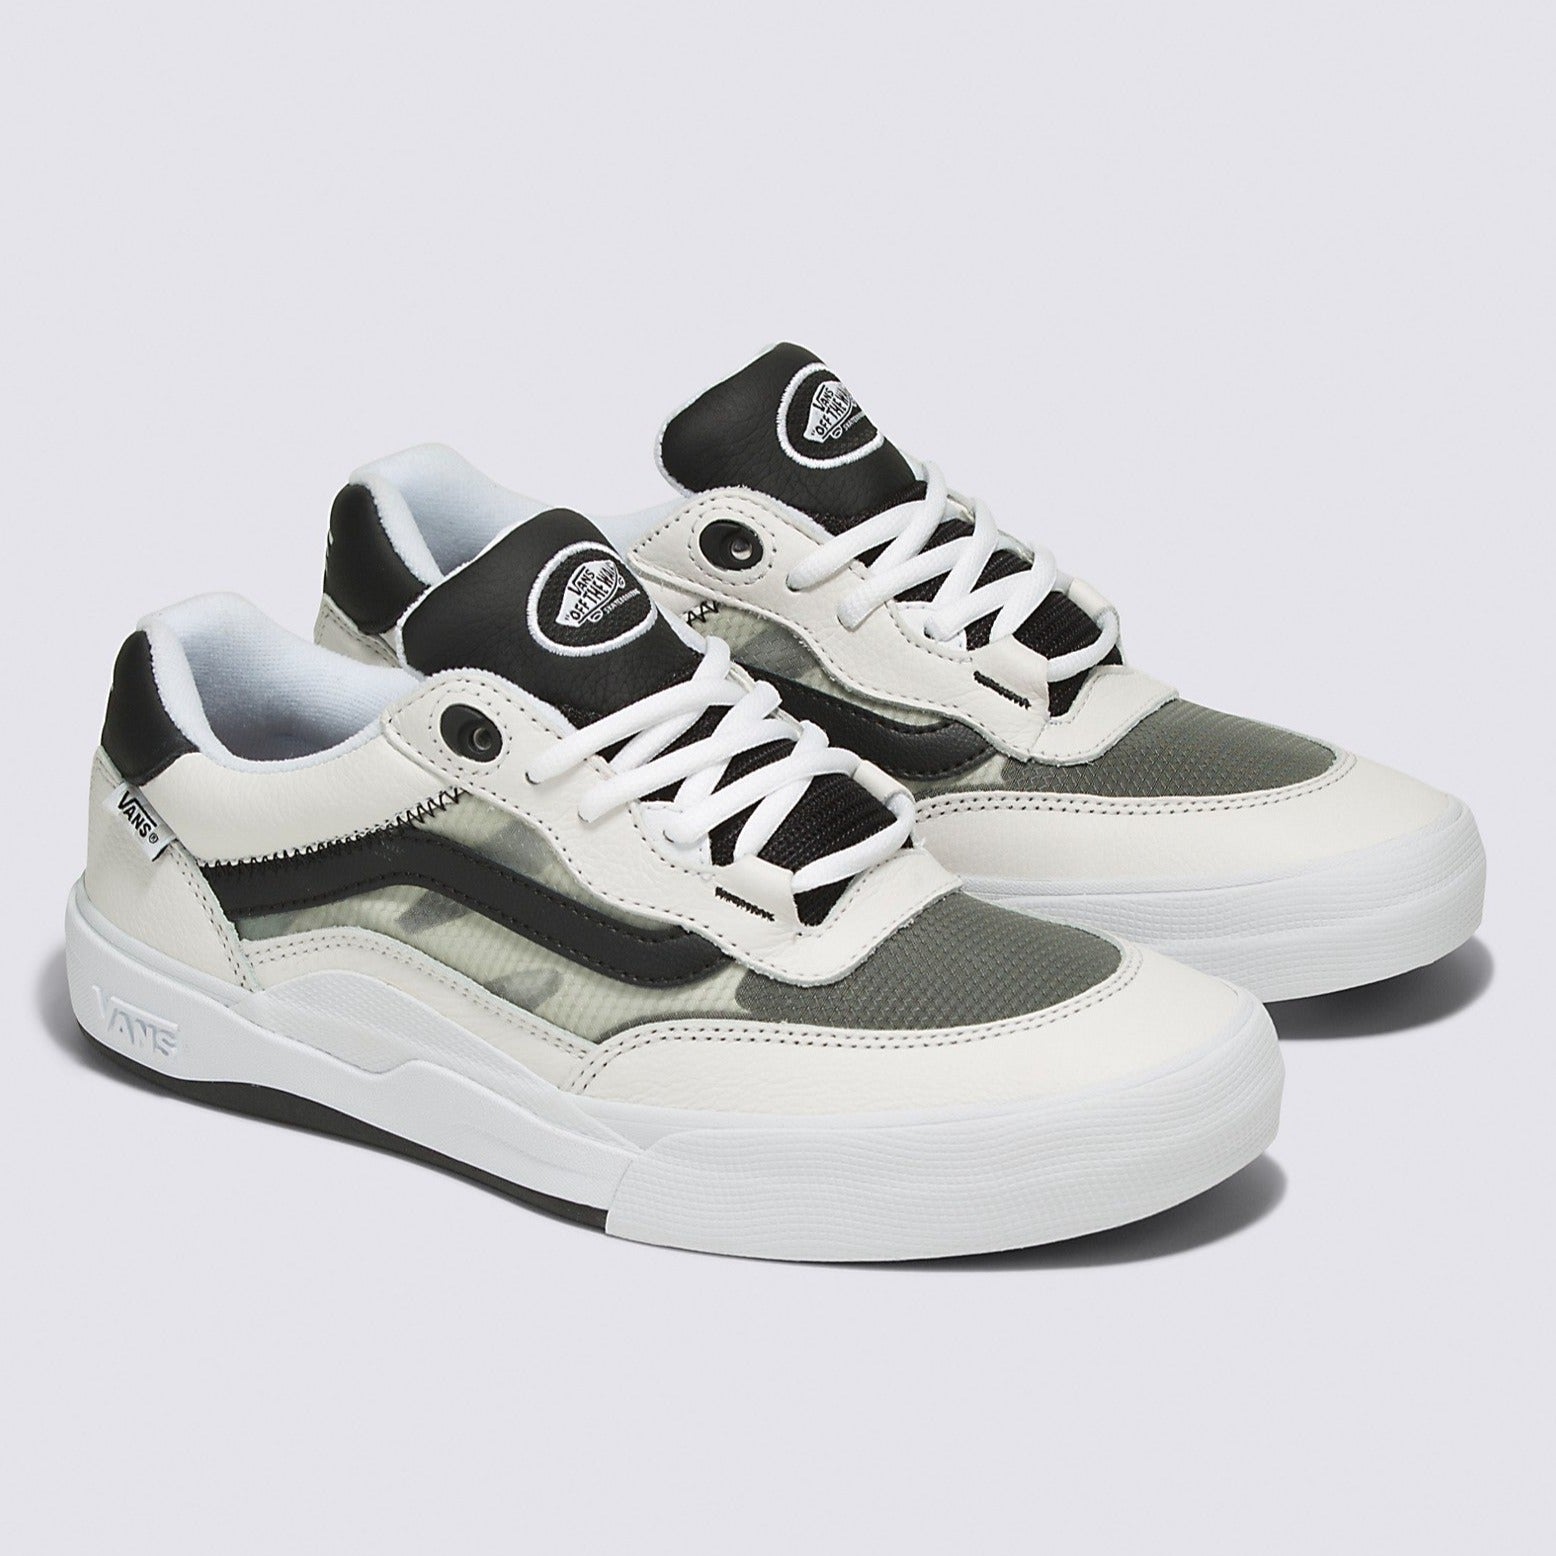 True White Leather Wayvee Vans Skate Shoe